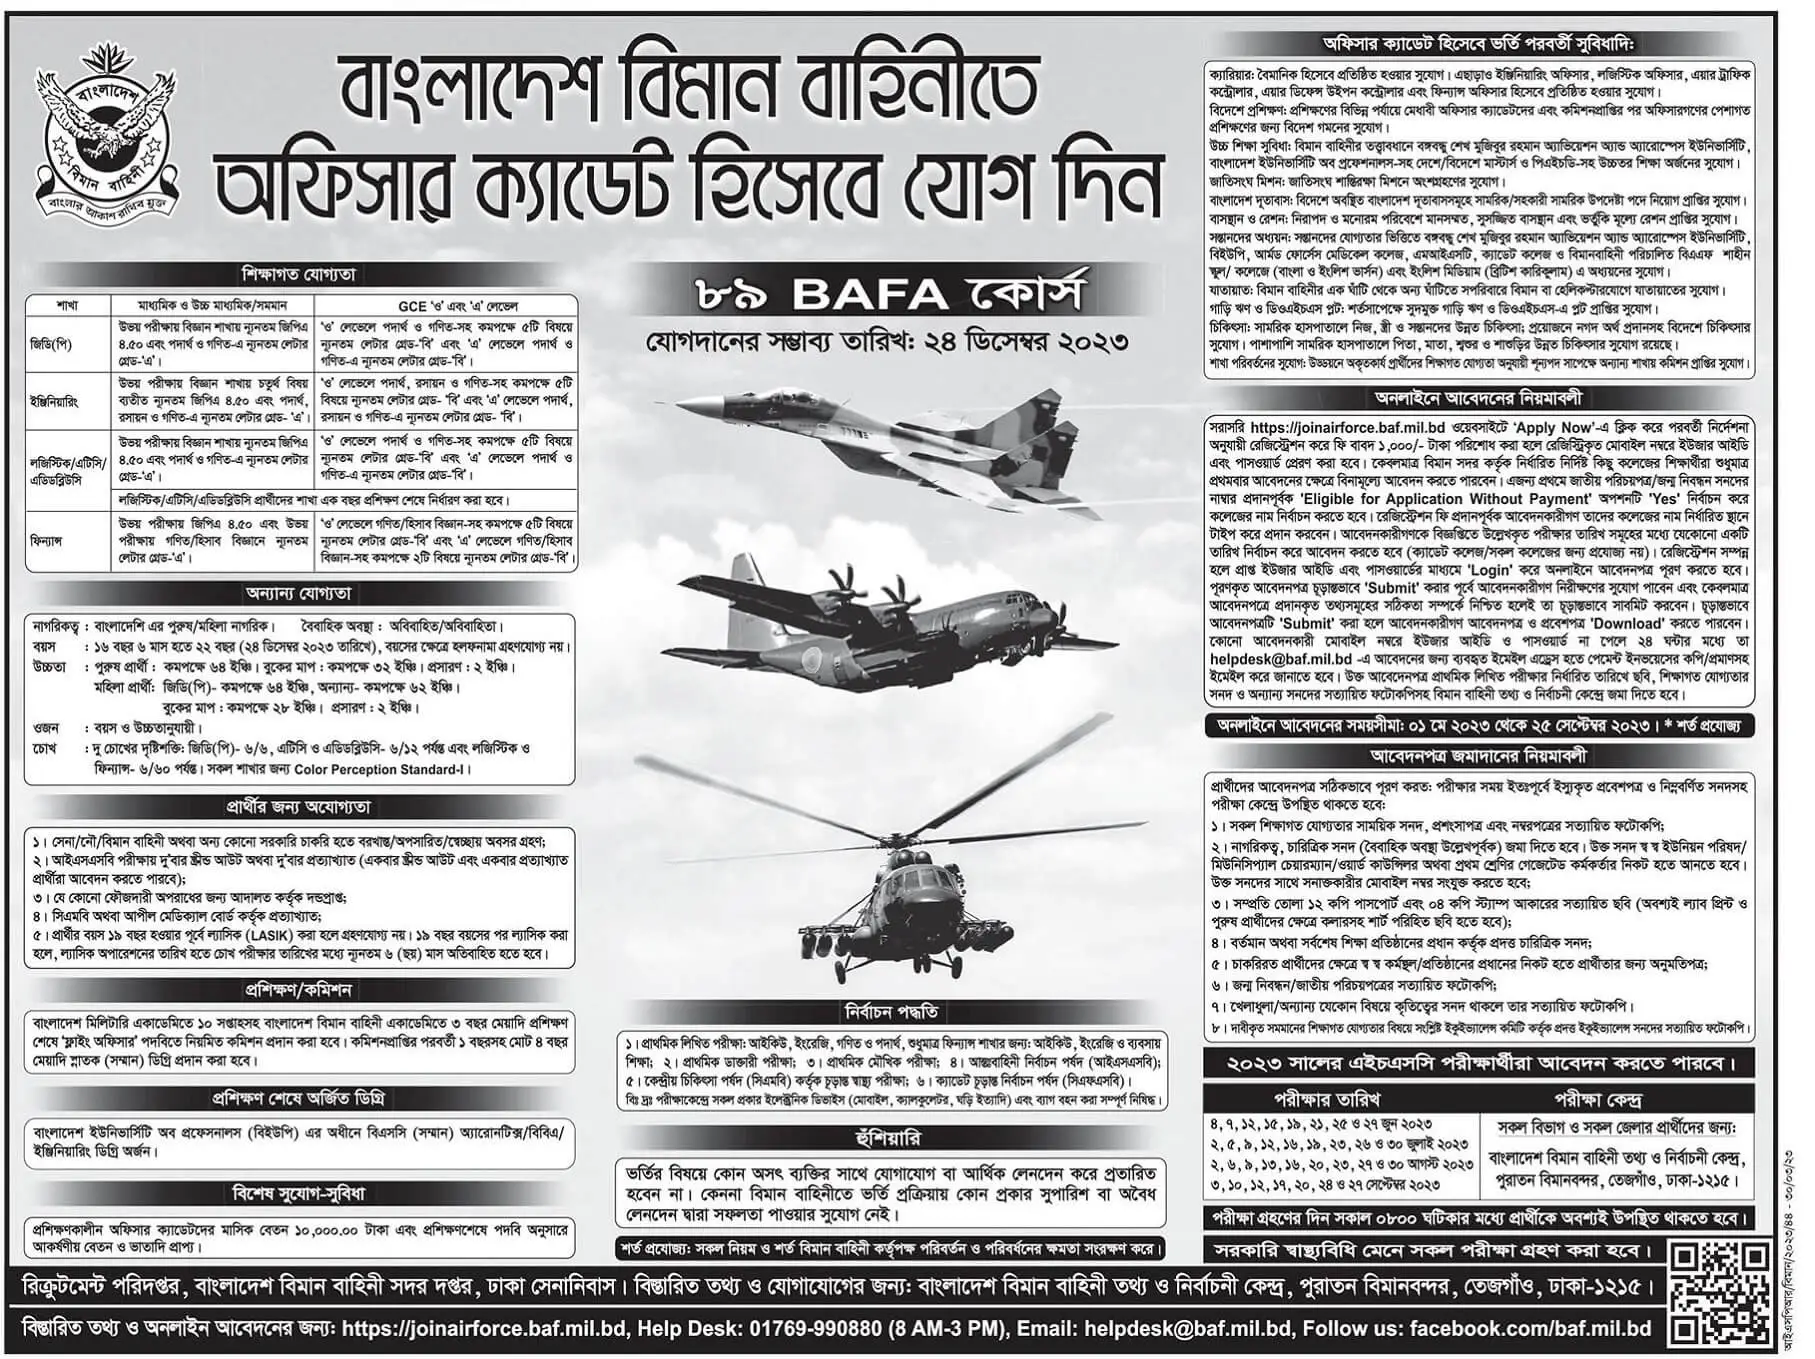 Bangladesh Air Force Job Circular 2023